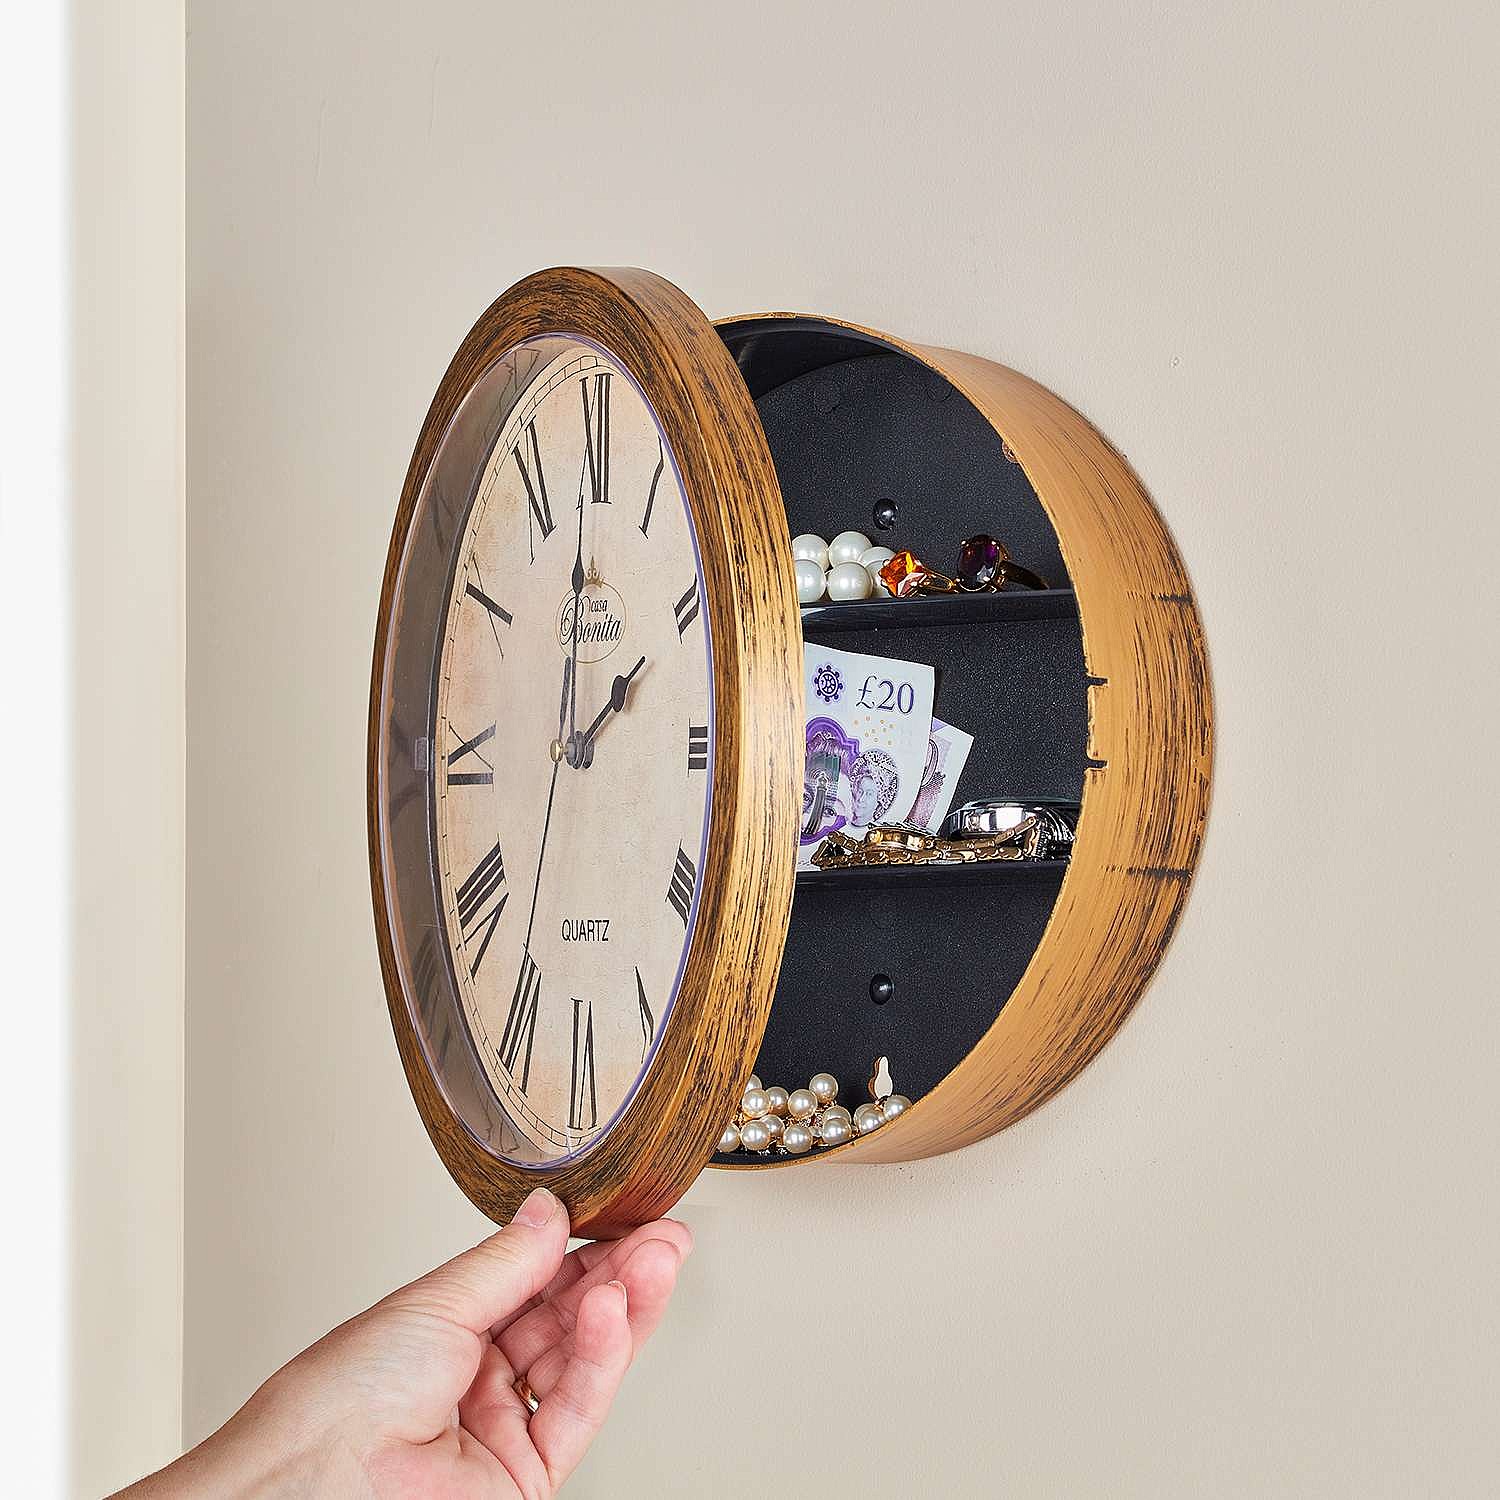 Wall Clock with Hidden Safe